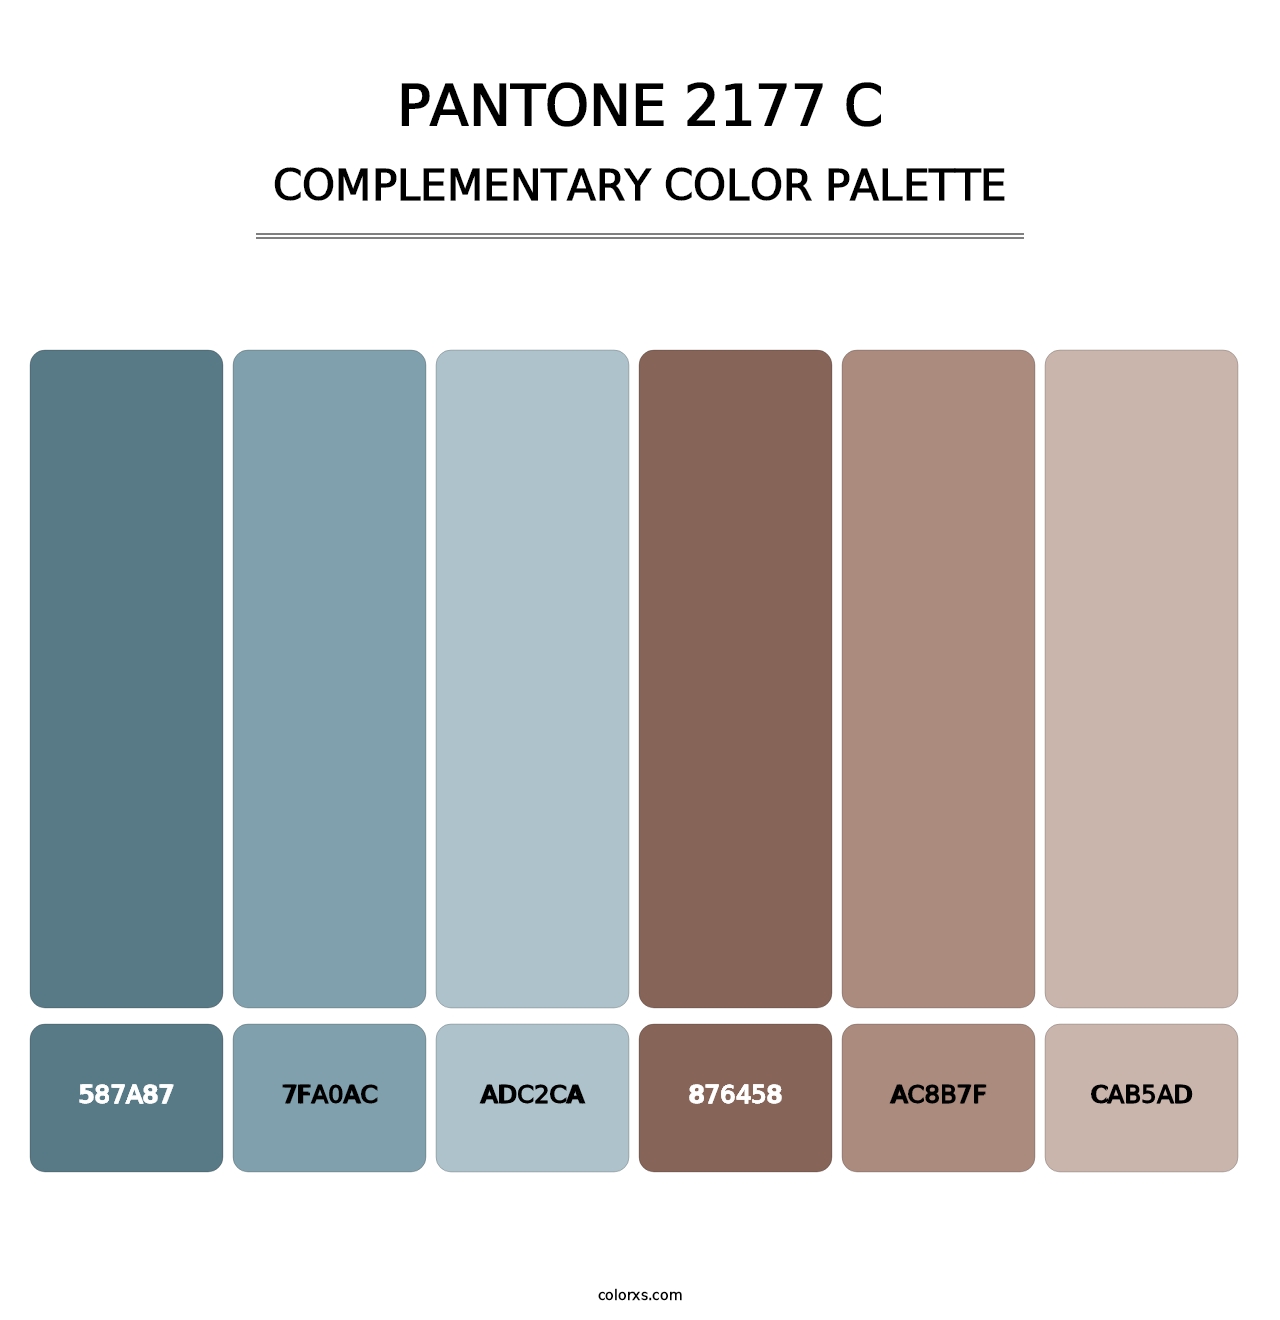 PANTONE 2177 C - Complementary Color Palette